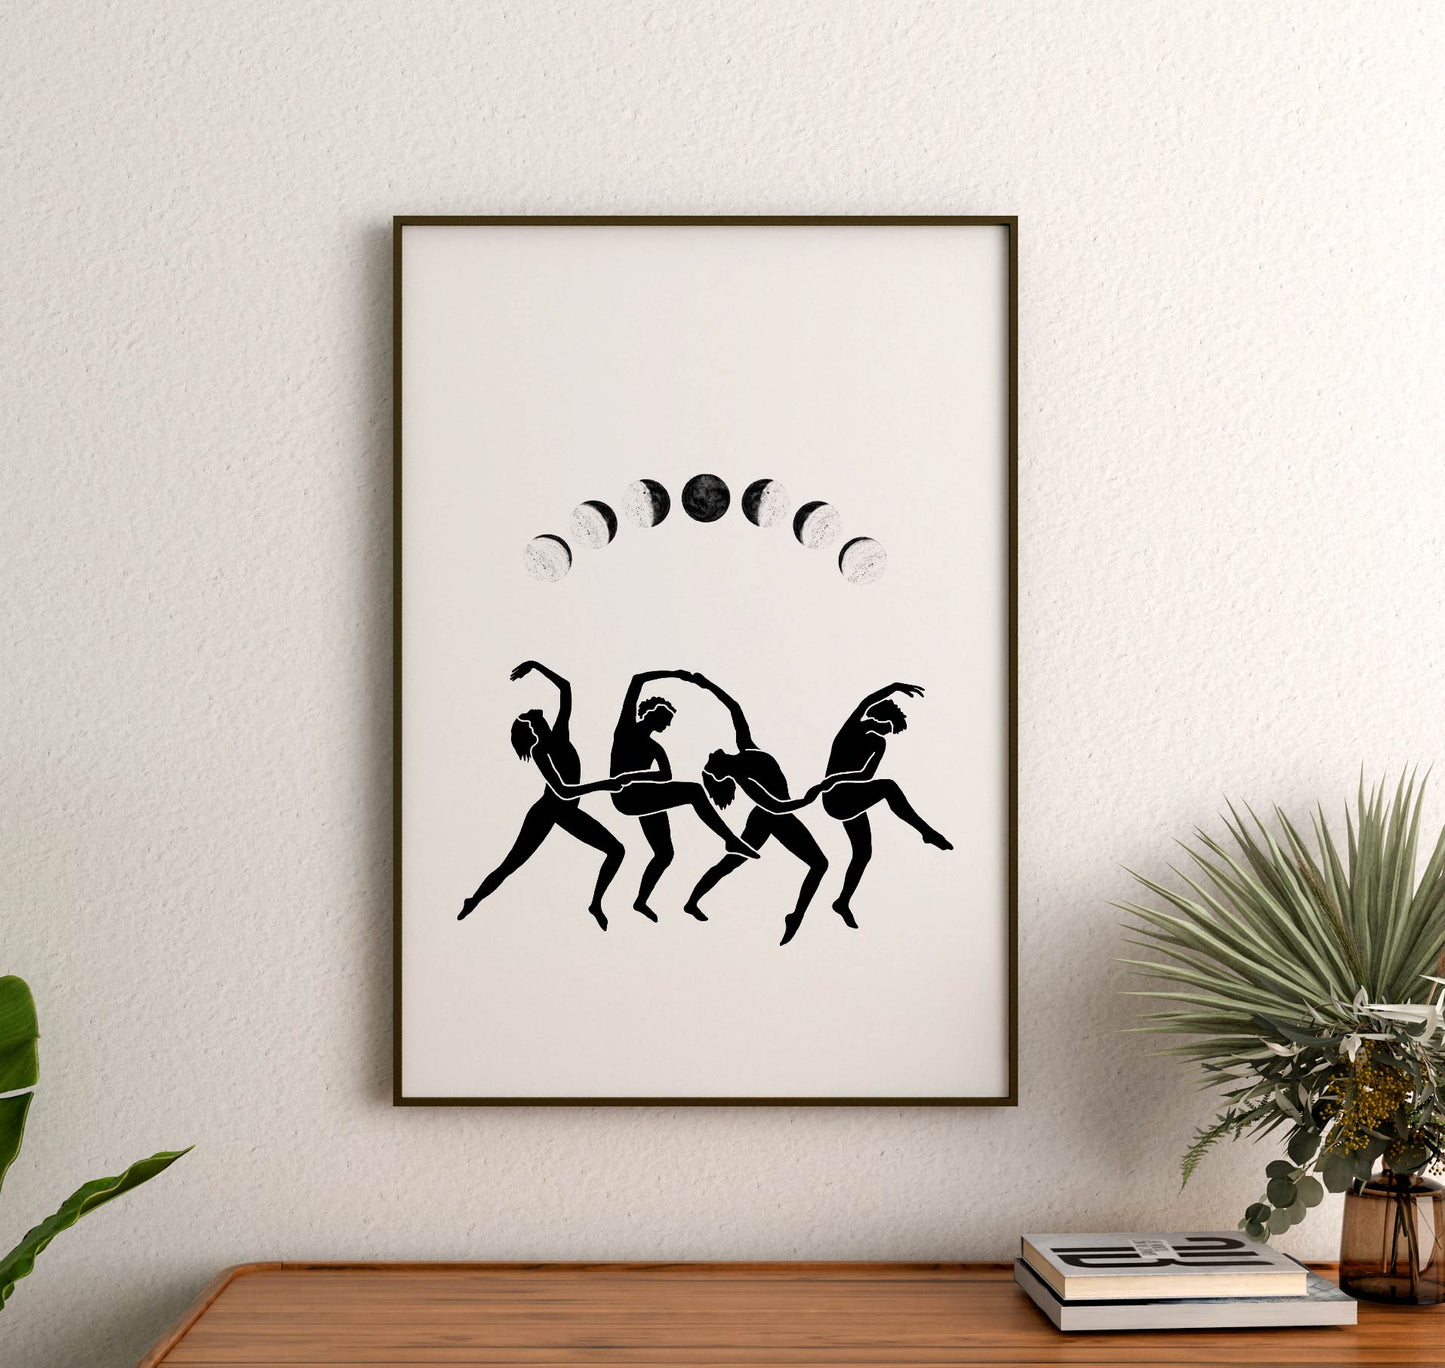 Moon Dancers - Art print - A4